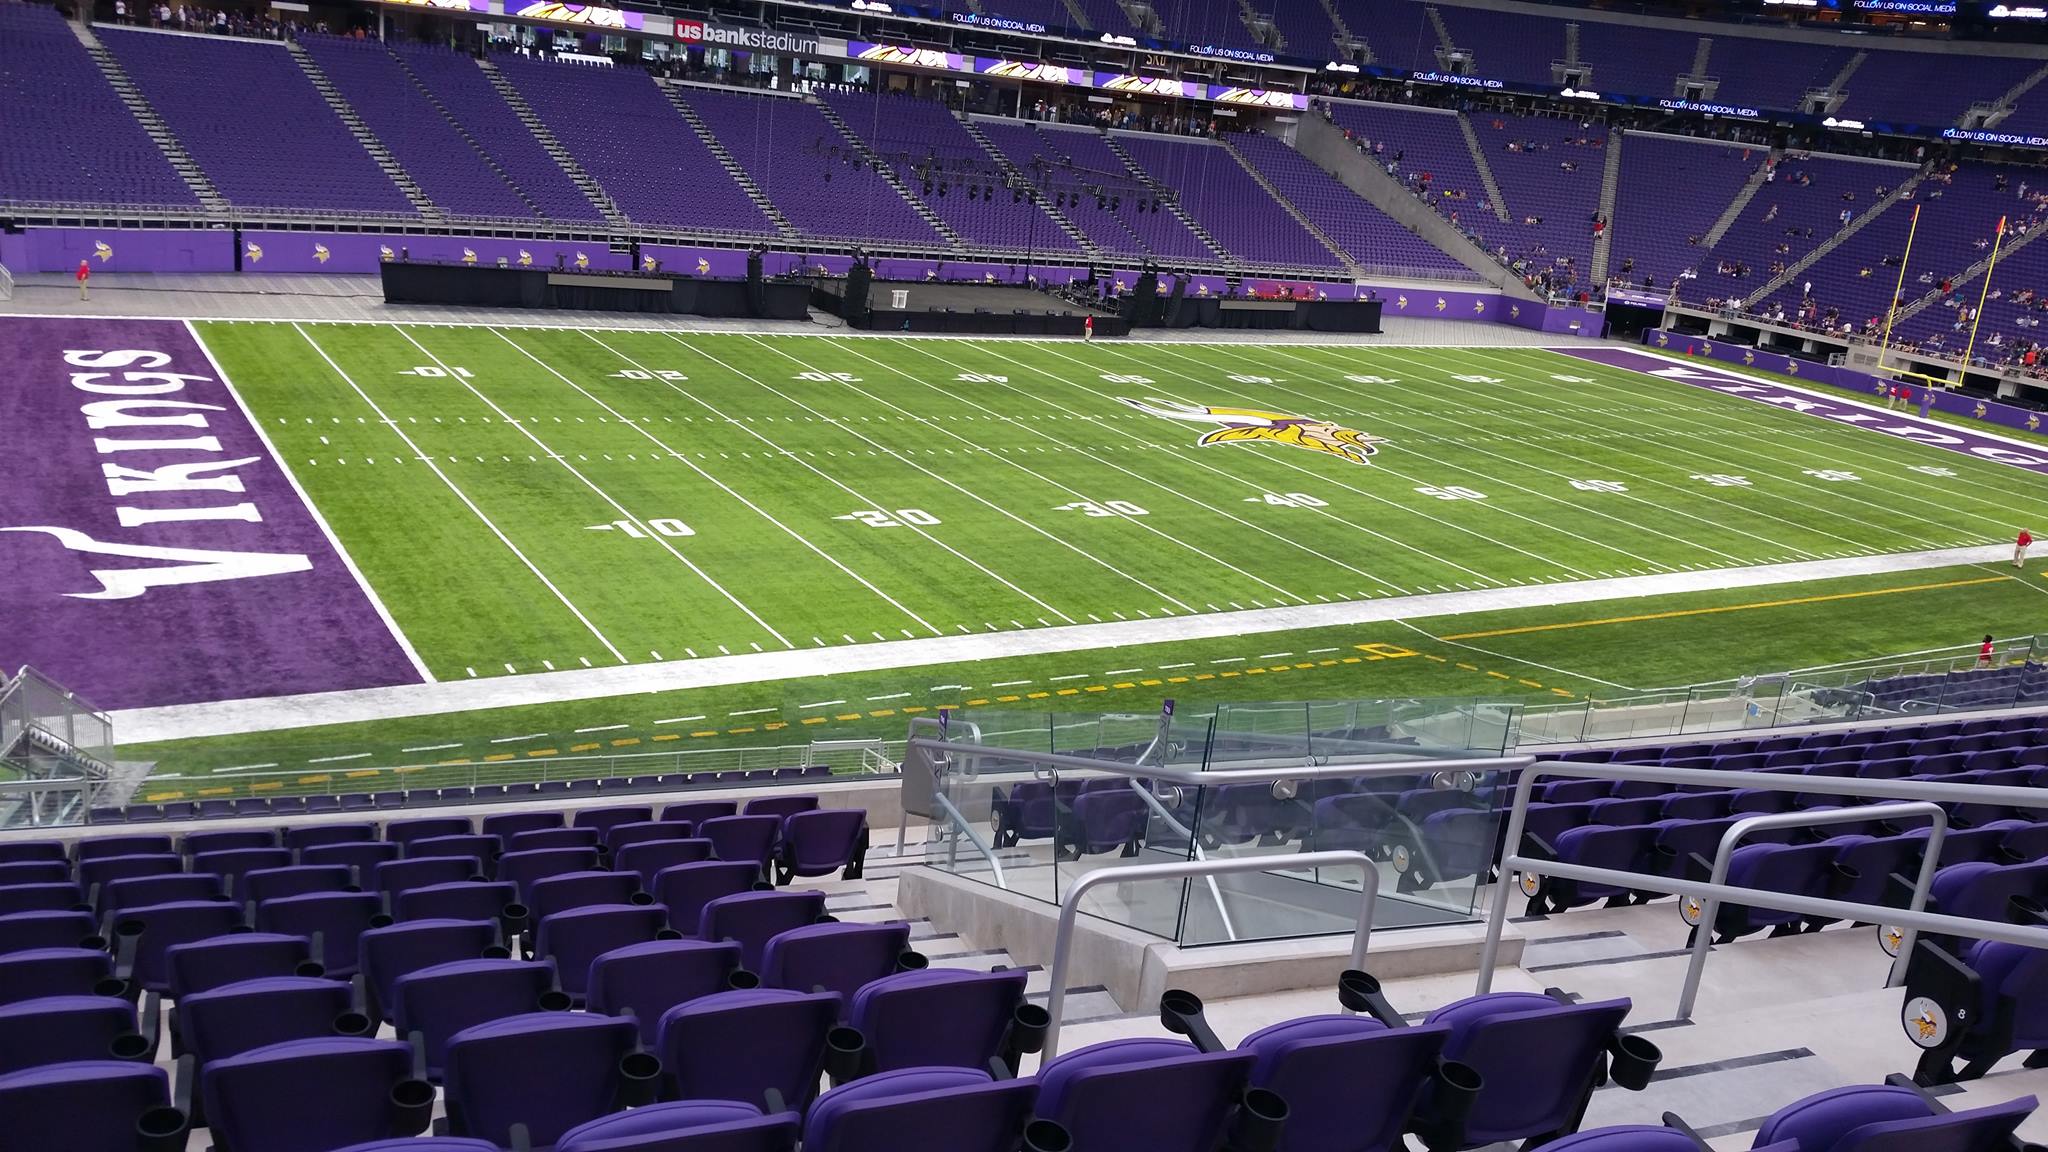 U.S. Bank Stadium section 135 row 11 seat 5 Vikings